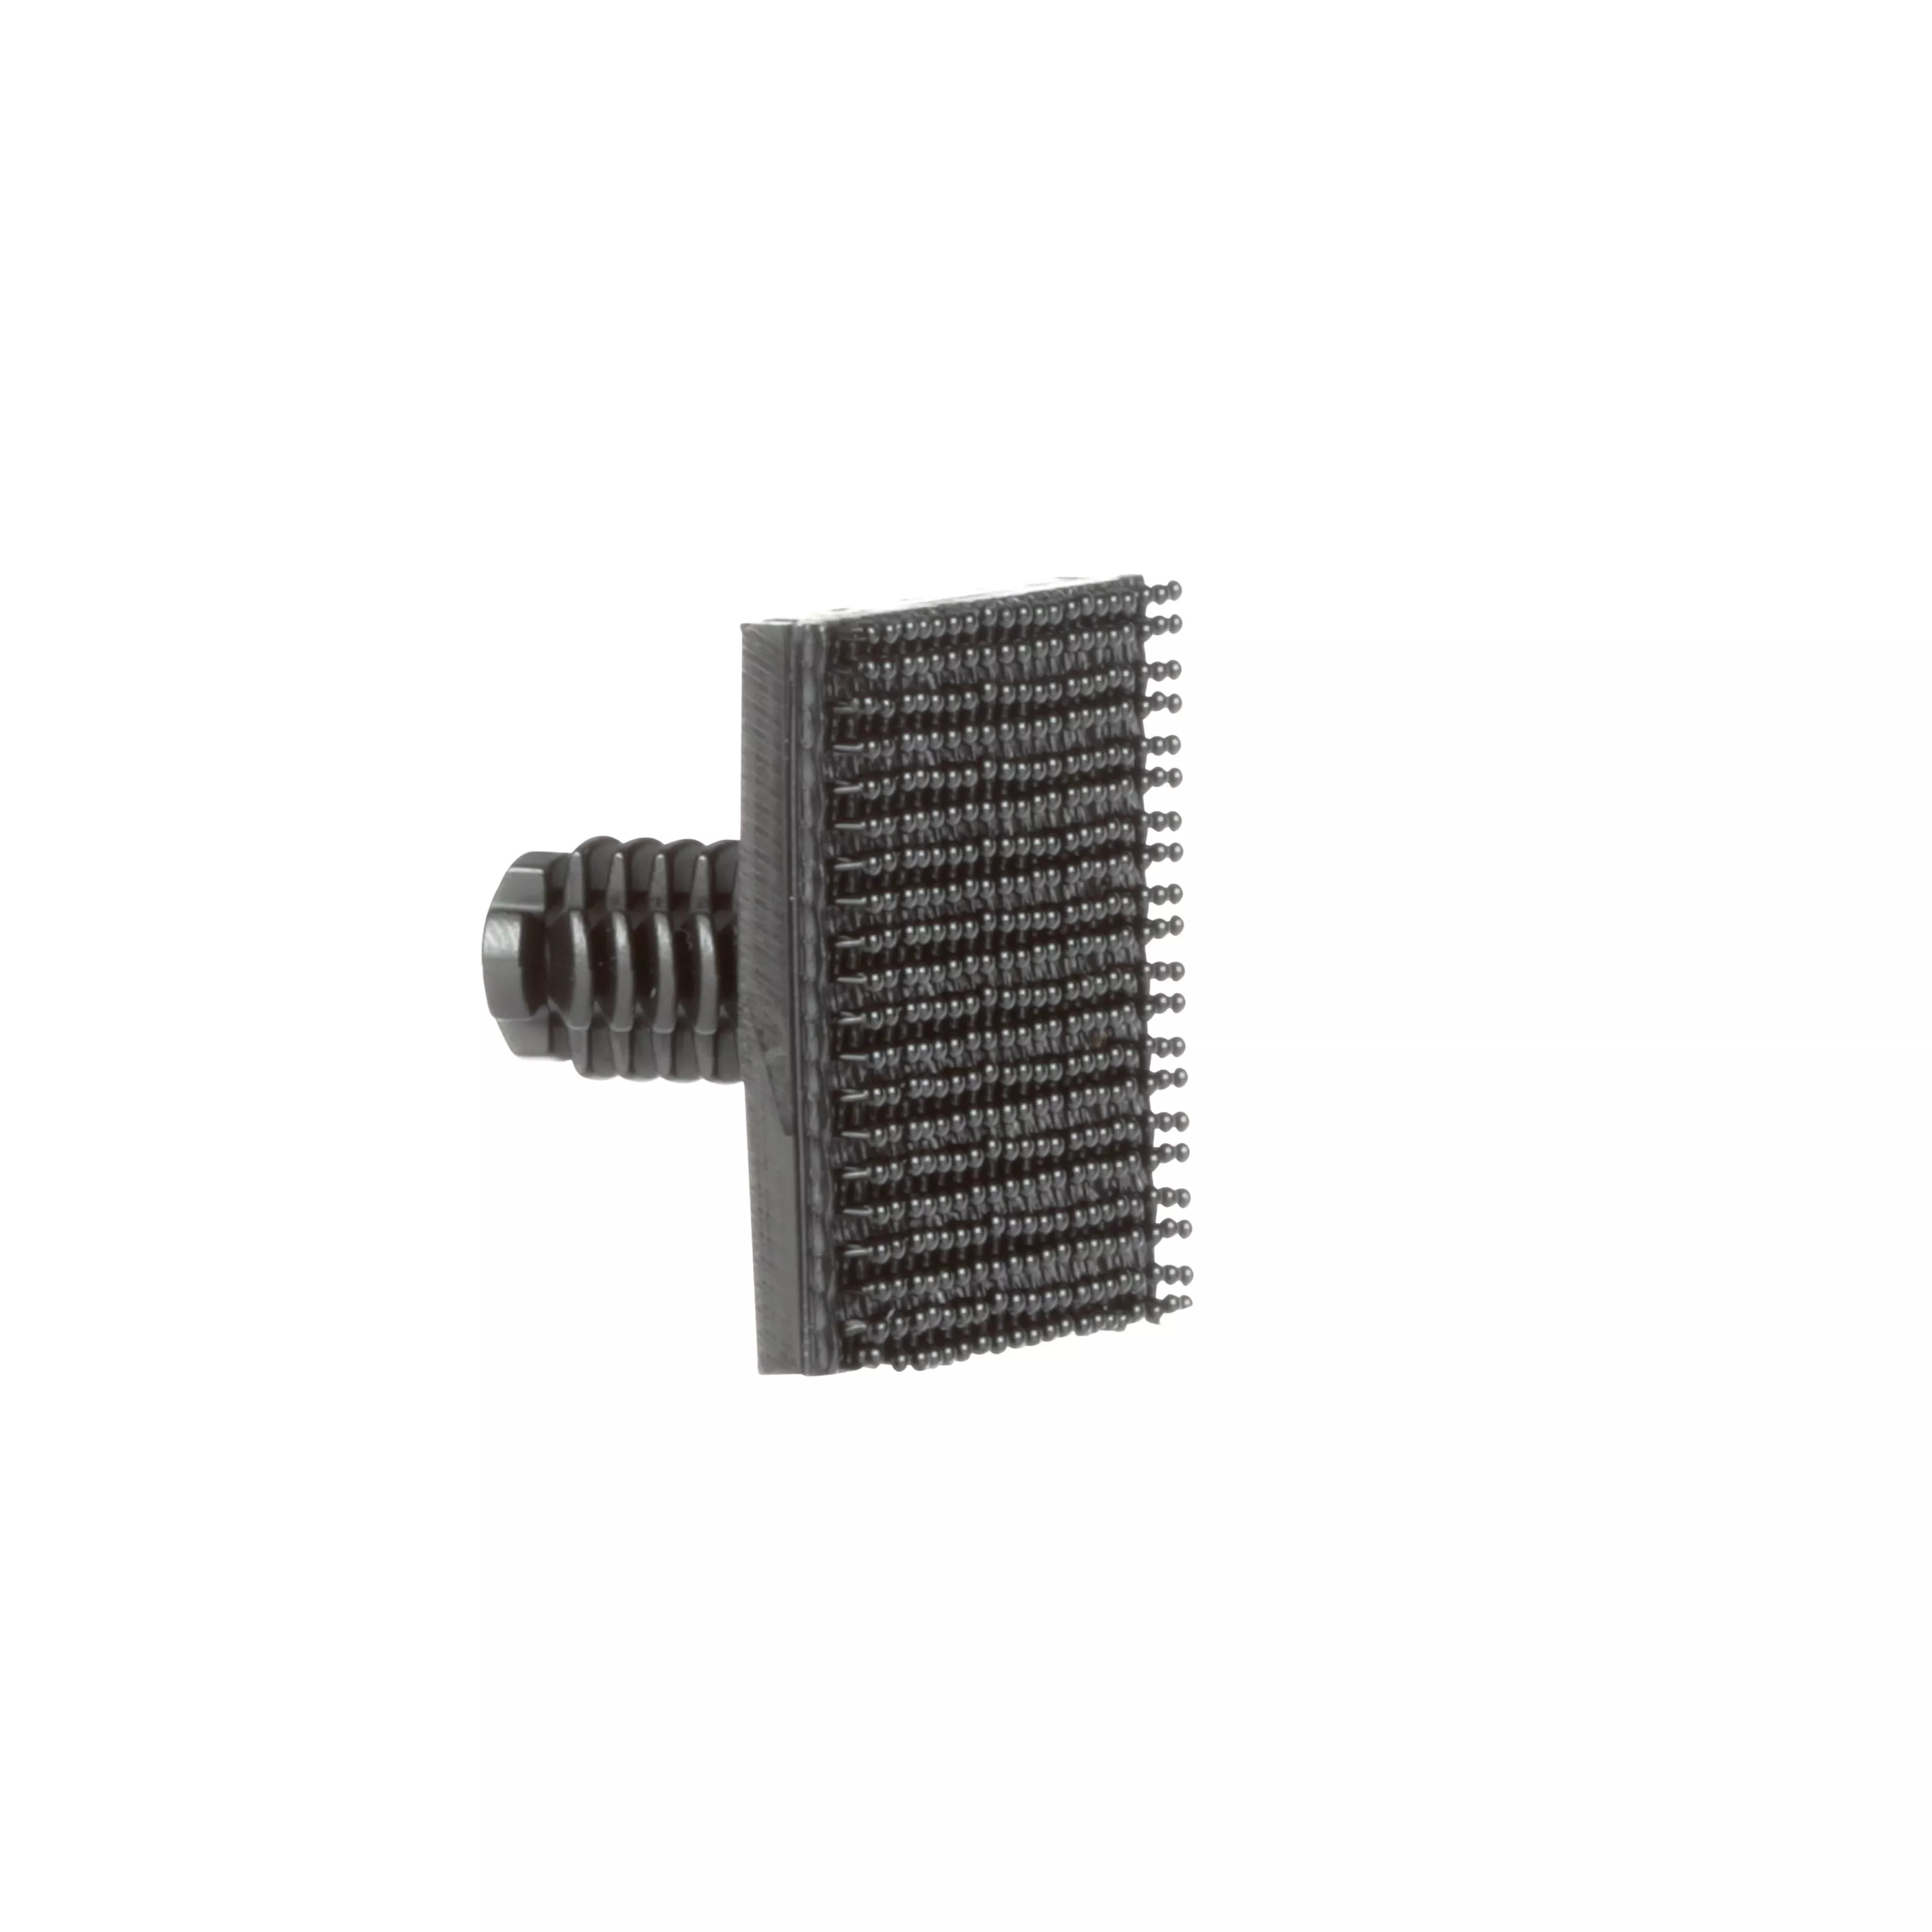 3M™ Dual Lock™ Reclosable Fastener SJ3748, Pop-in Piece Part, Stem
Density 400, Black, 26 mm x 26 mm, 1000 Piece/Case